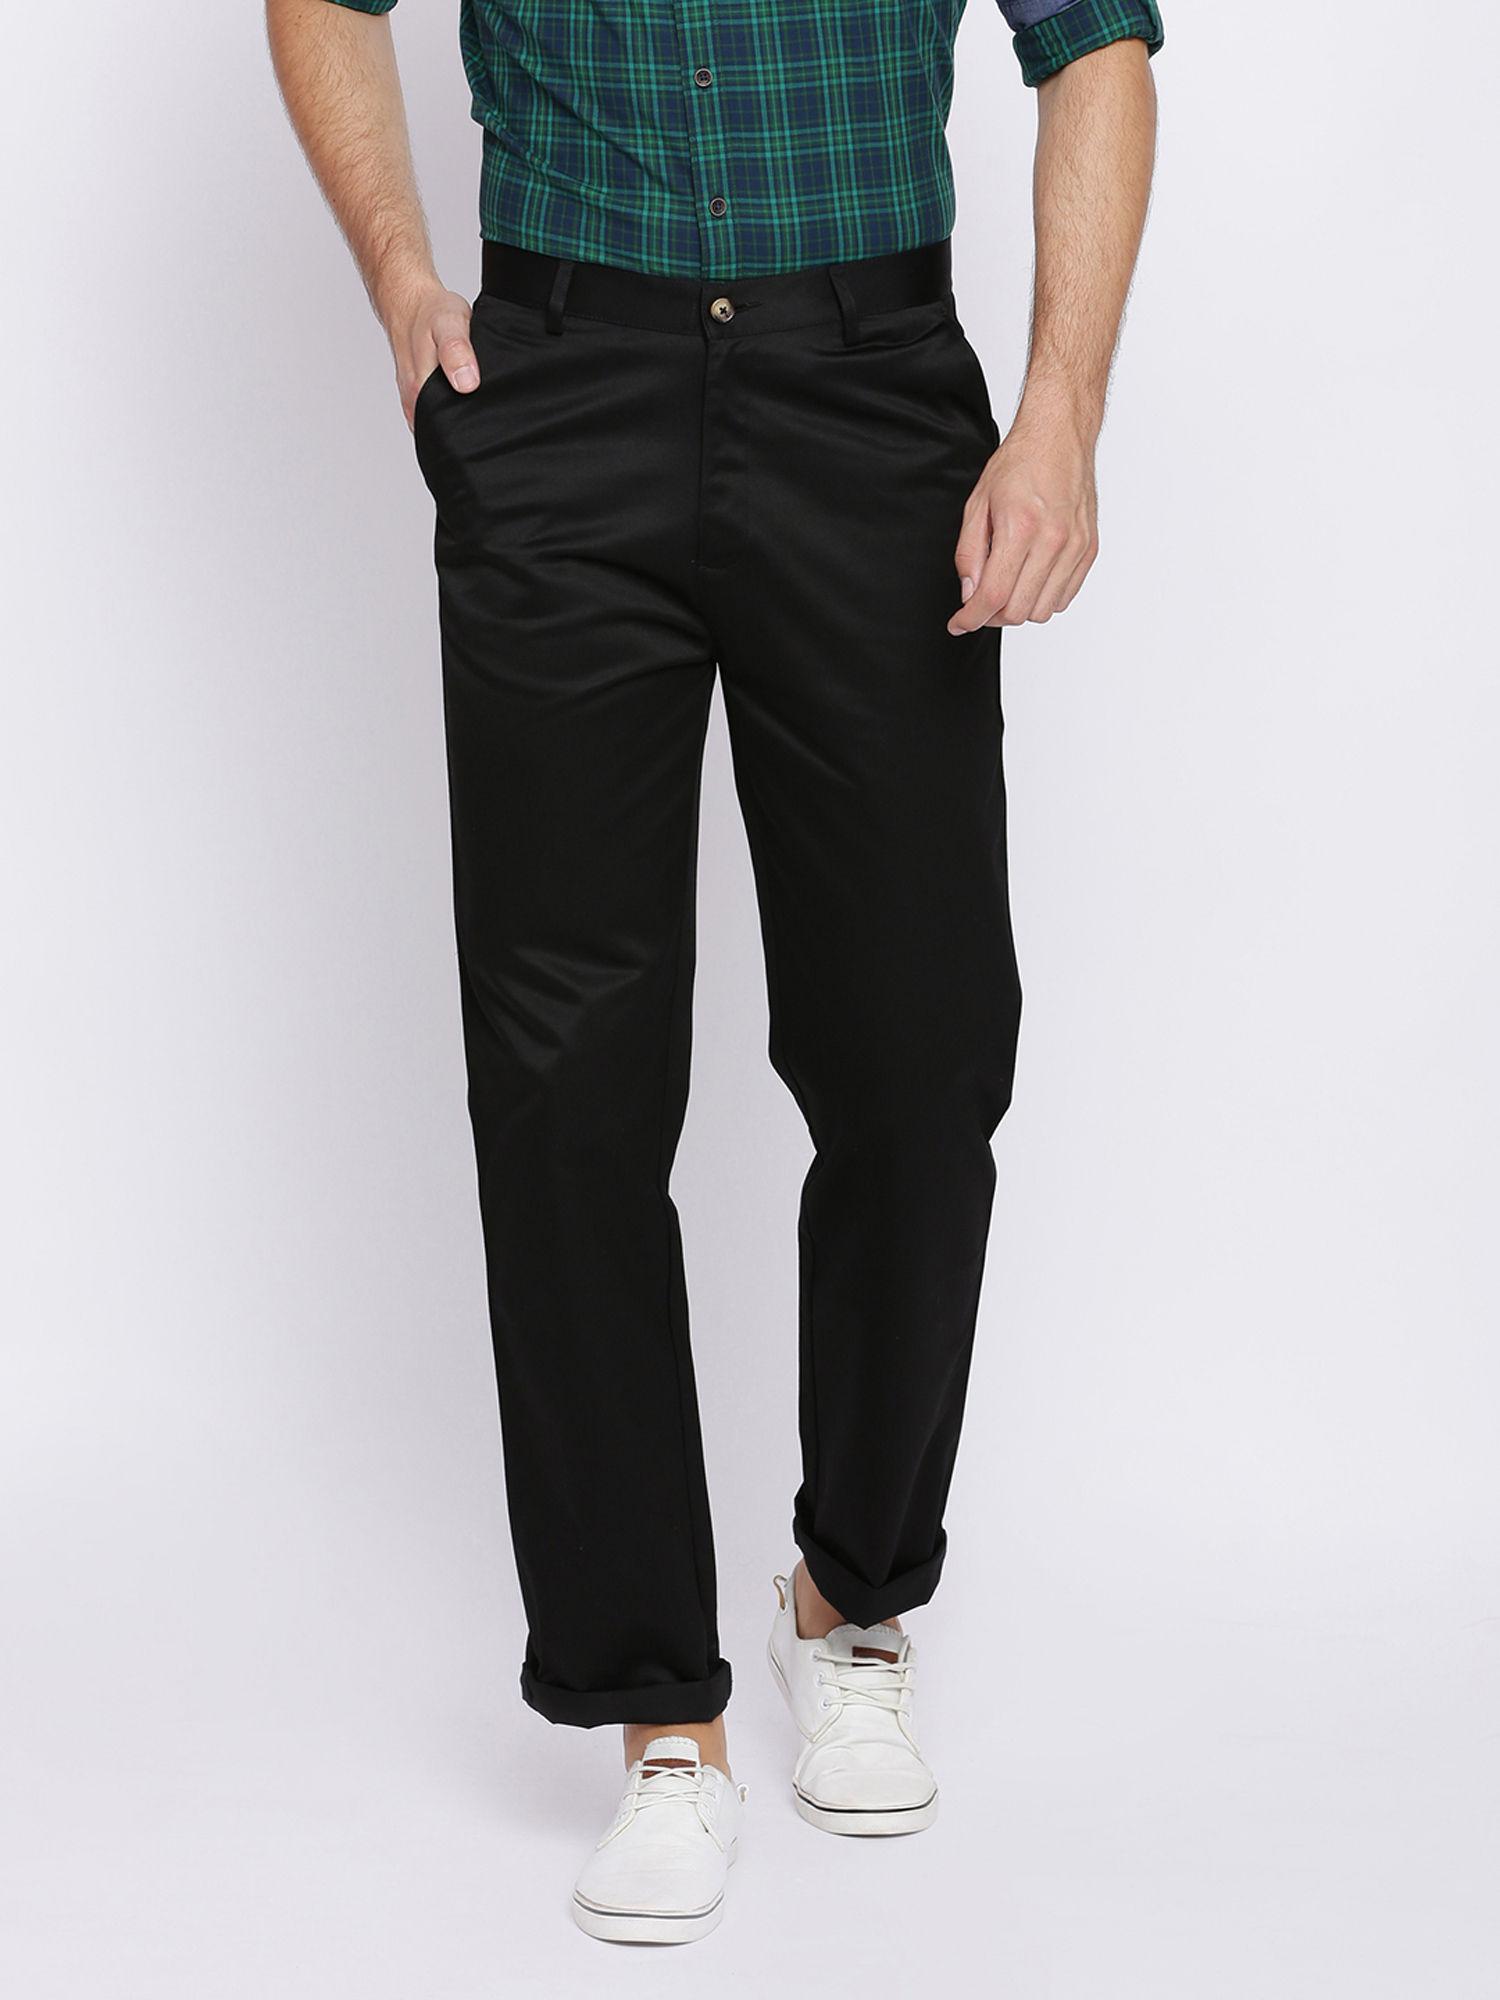 comfort-fit-black-satin-weave-poly-cotton-trousers